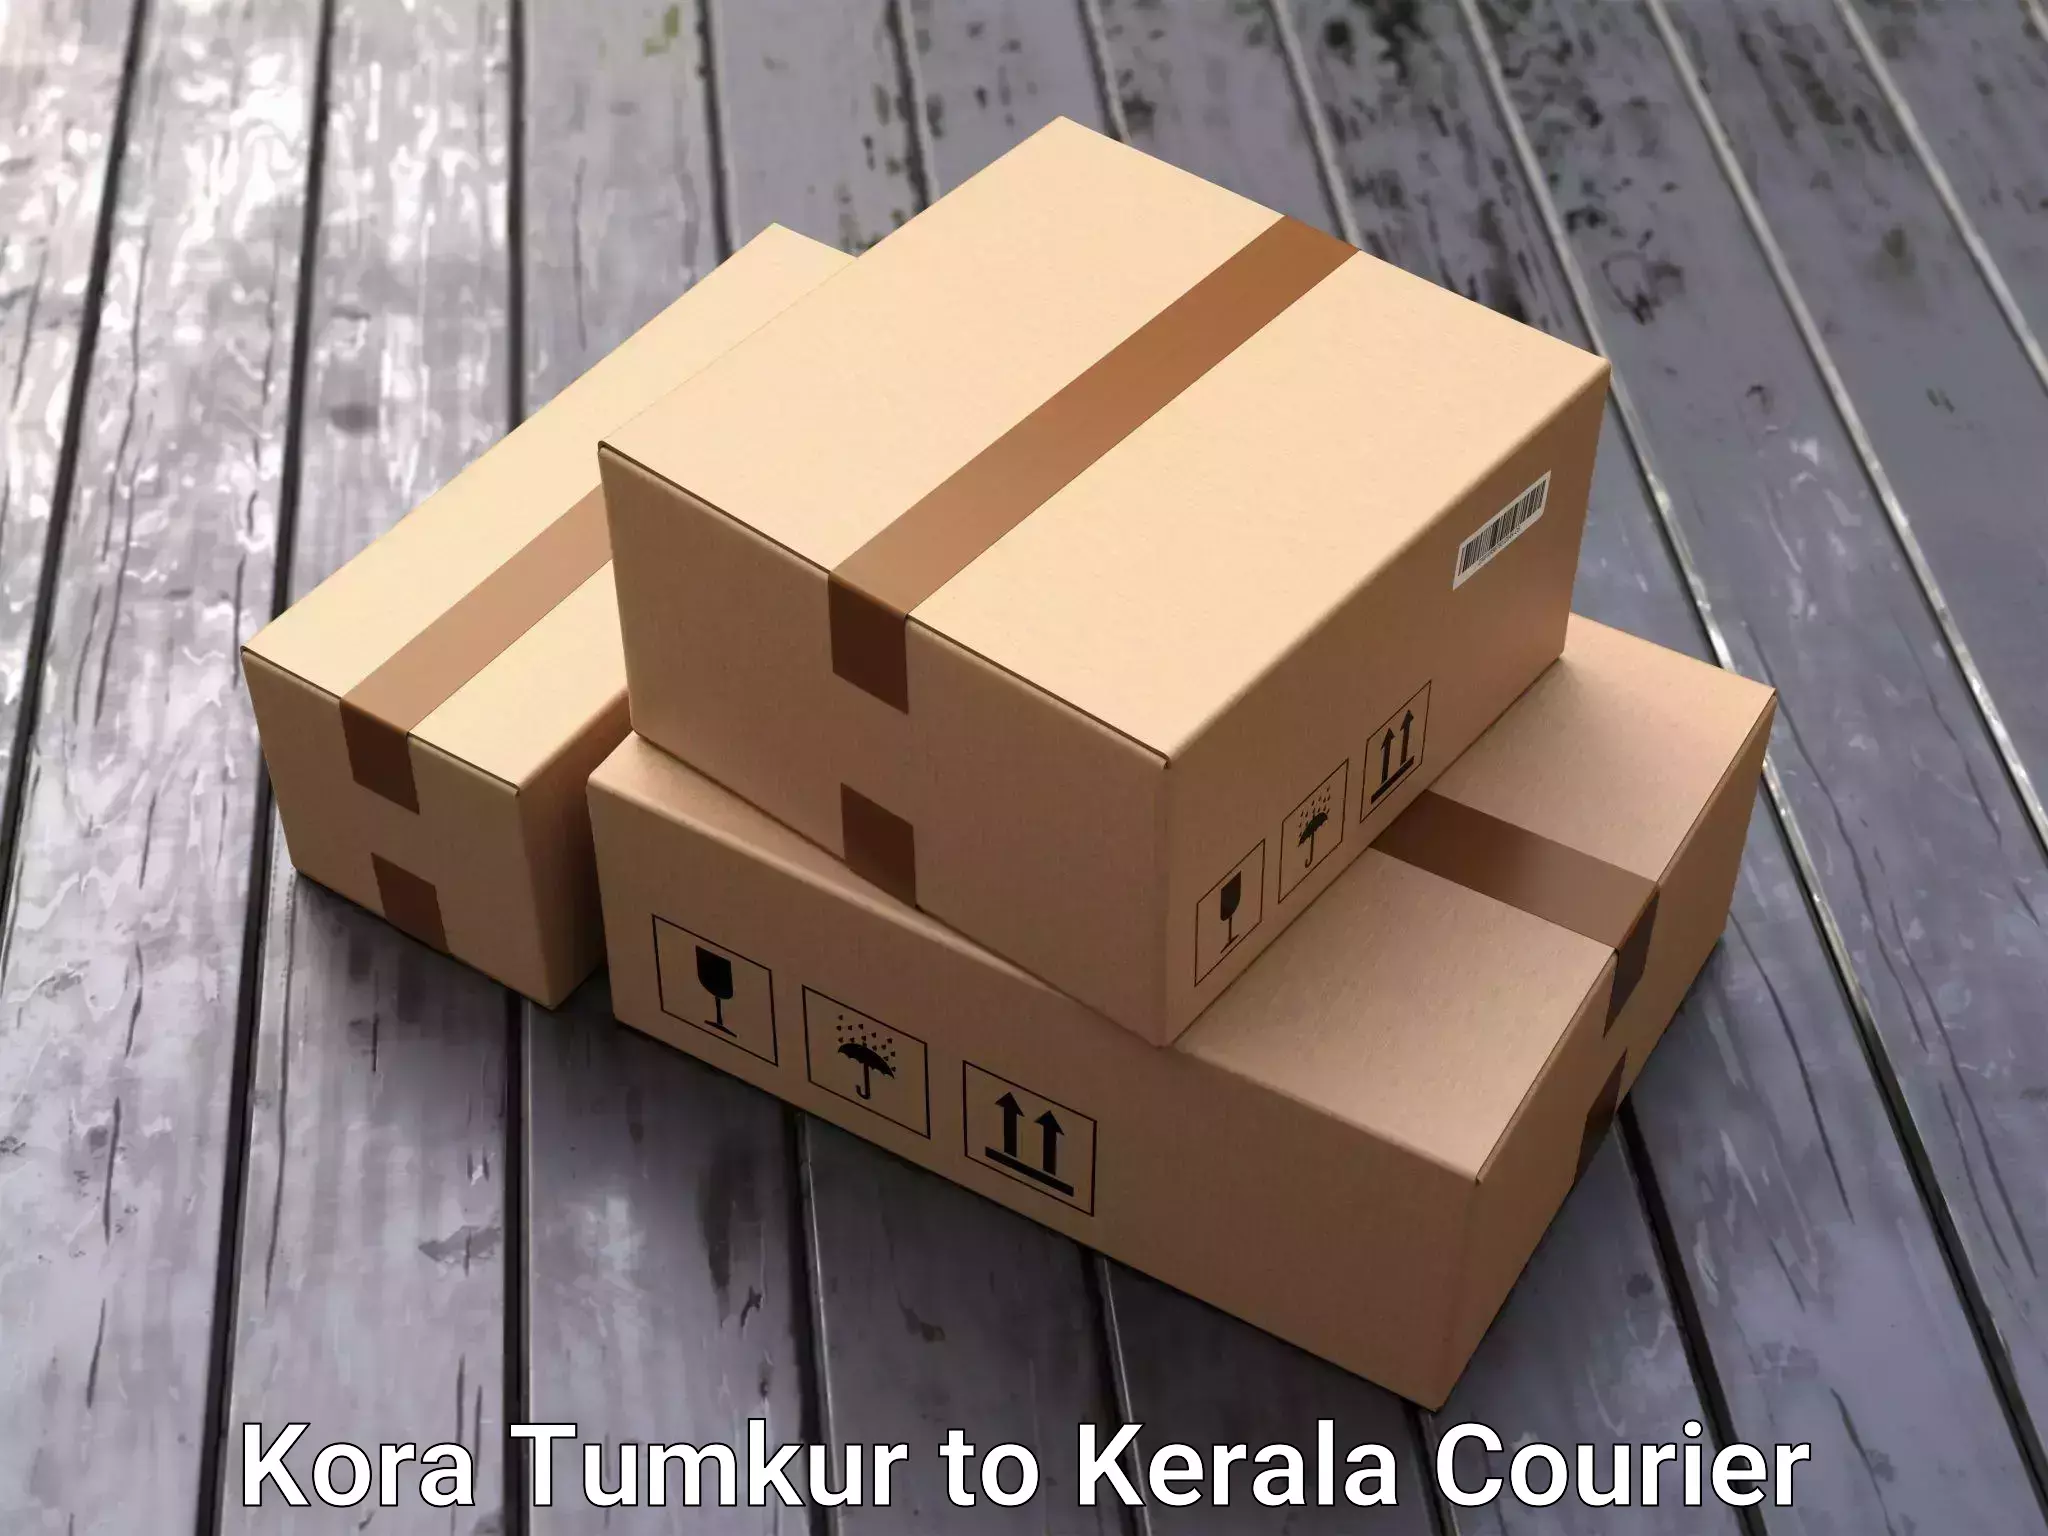 Door-to-door relocation services Kora Tumkur to Tiruvalla